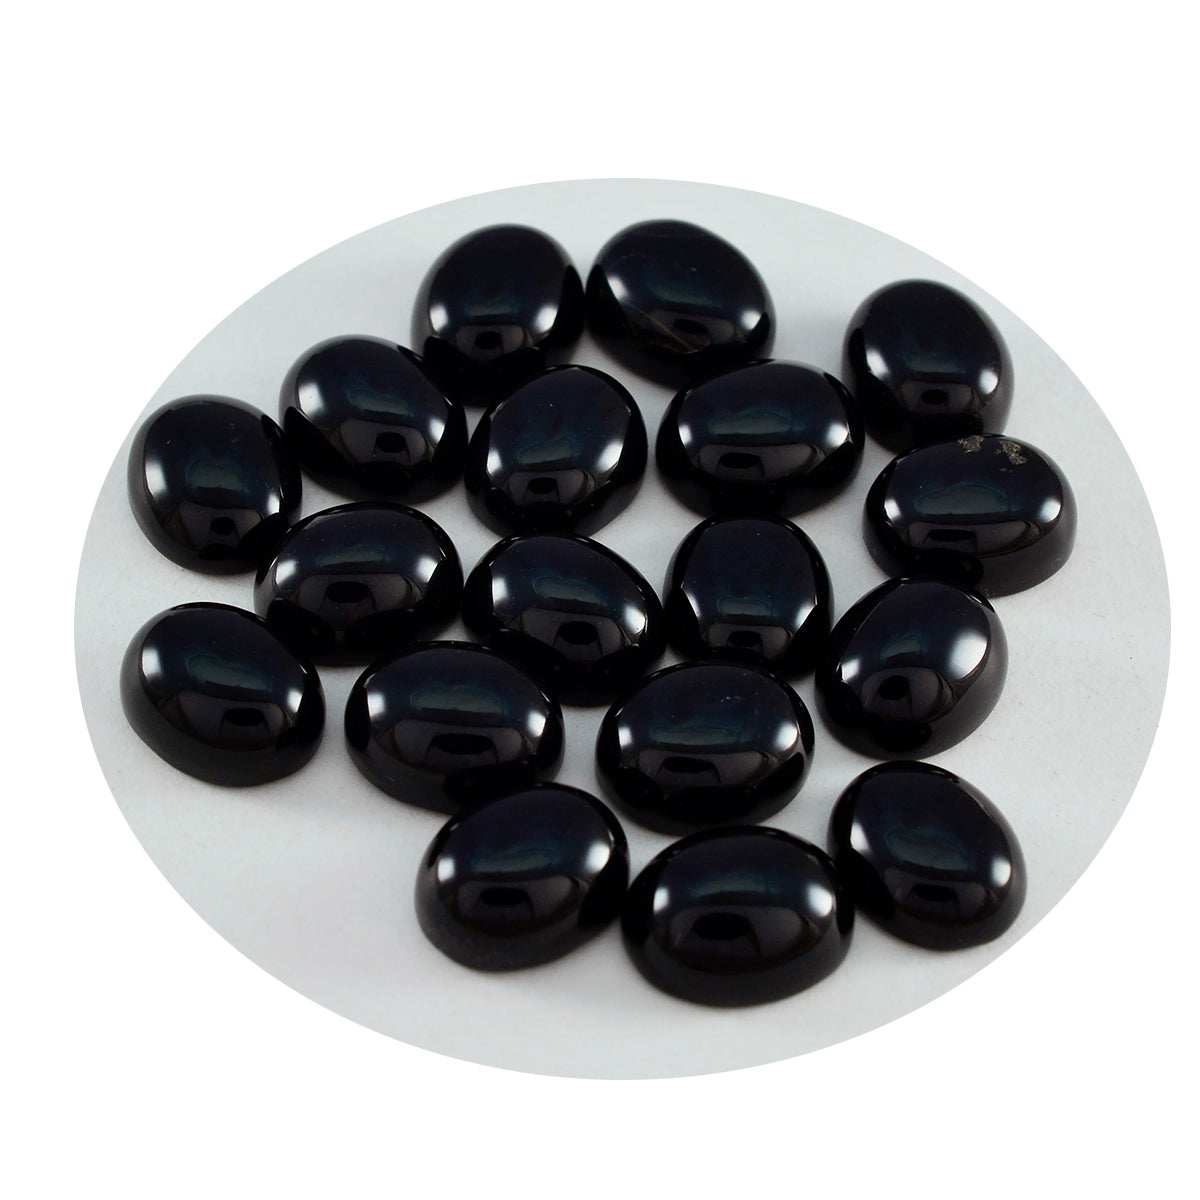 Riyogems 1PC zwarte onyx cabochon 5x7 mm ovale vorm mooie kwaliteitssteen